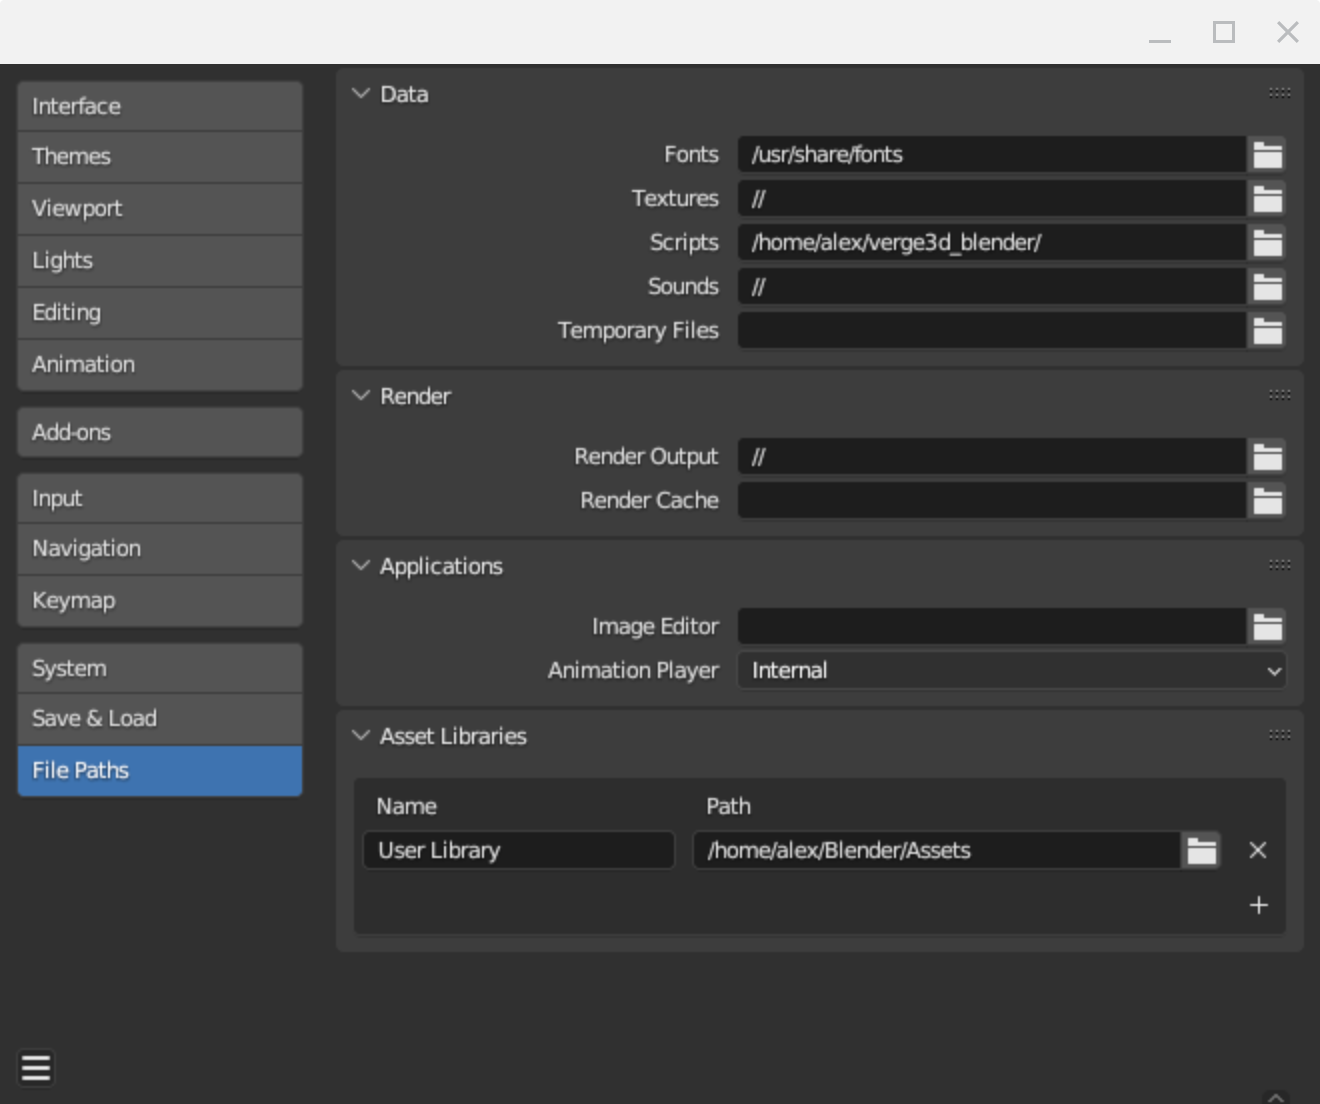 Modifying Scripts path in Blender for ChromeOS